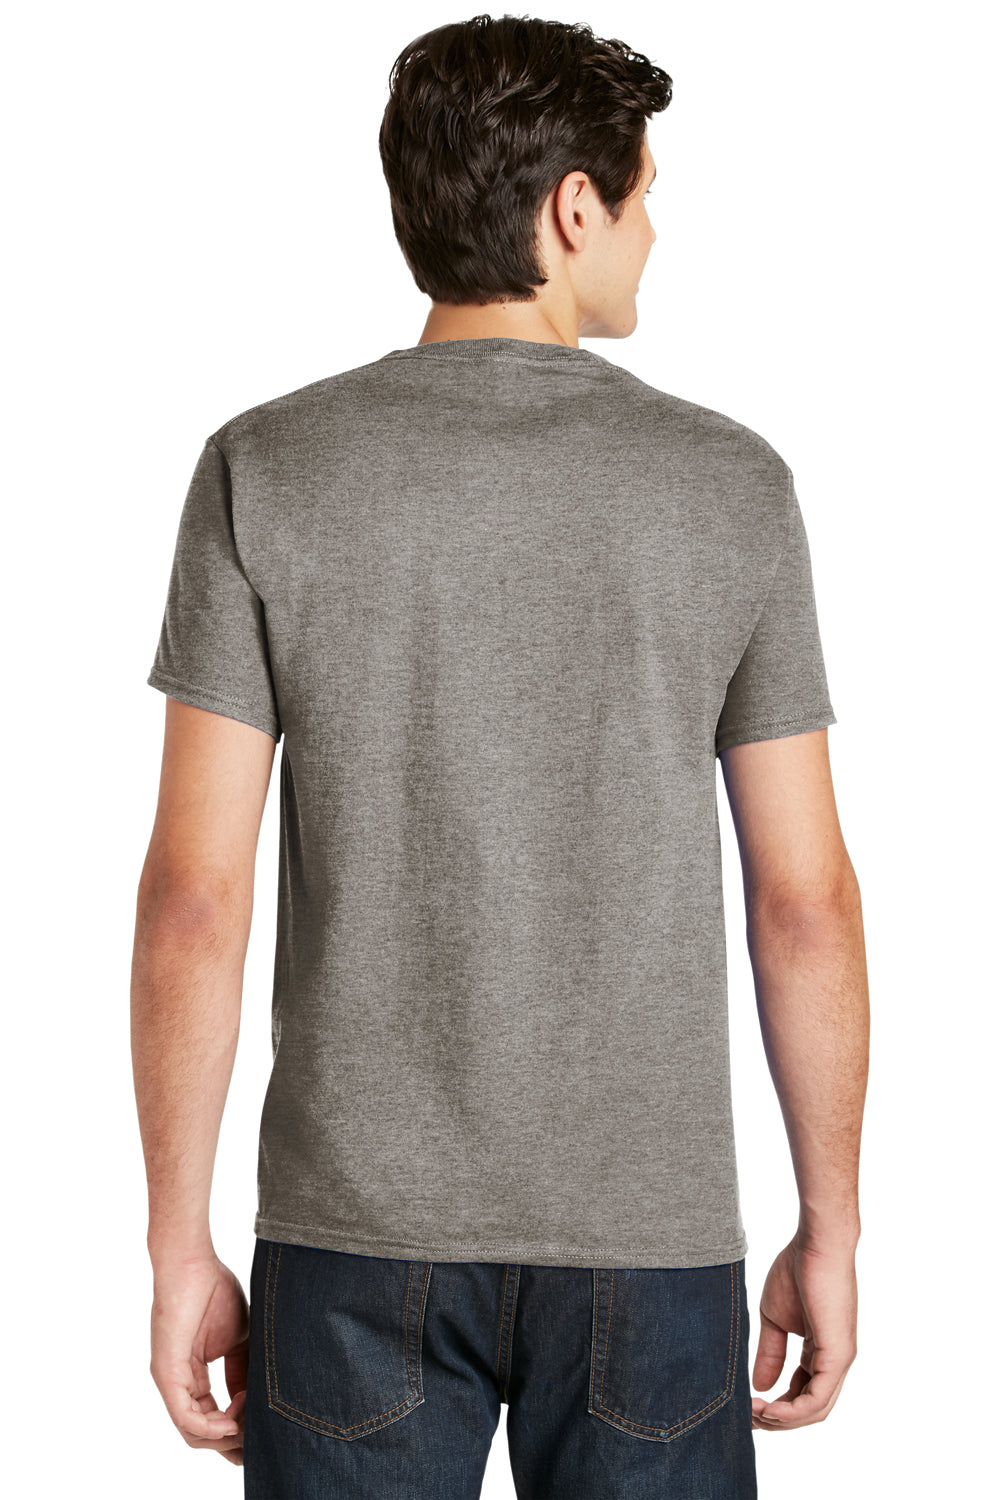 Hanes Mens ComfortSoft Short Sleeve Crewneck T-Shirt Oxford Gray Back